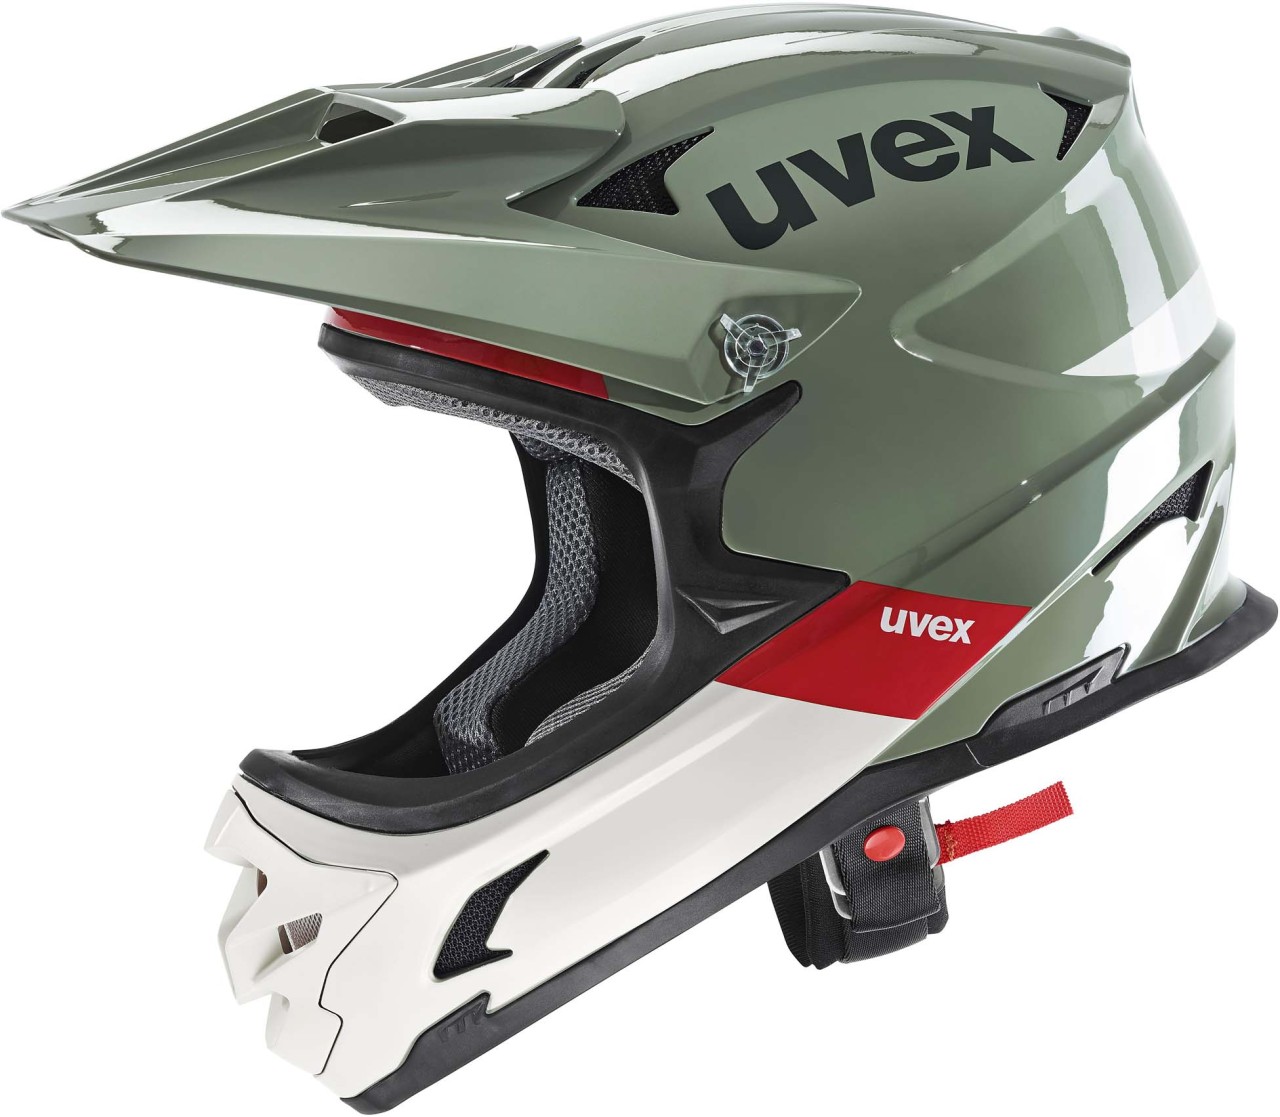 Uvex hlmt 10 - Casco bicicleta MTB